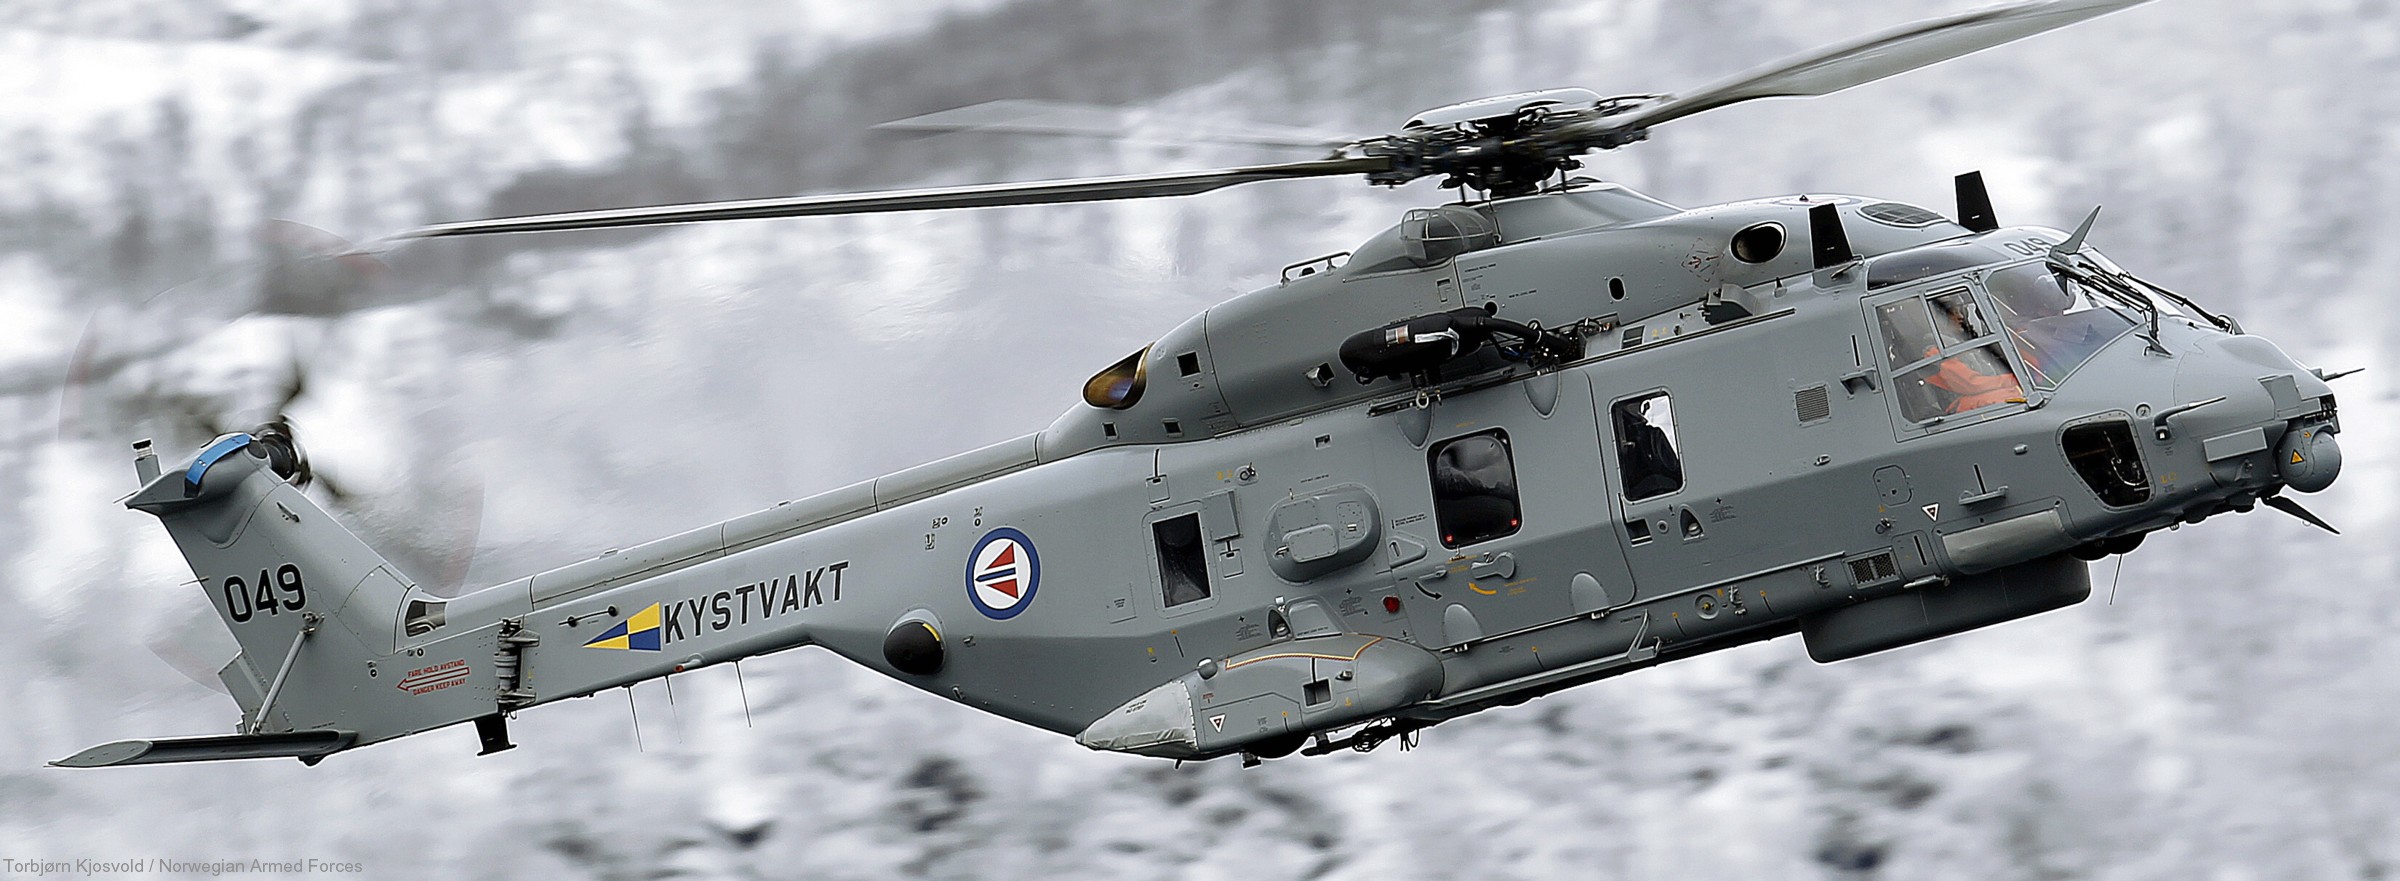 nh90 nfh asw helicopter royal norwegian coast guard navy air force kystvakt sjoforsvaret 049 11